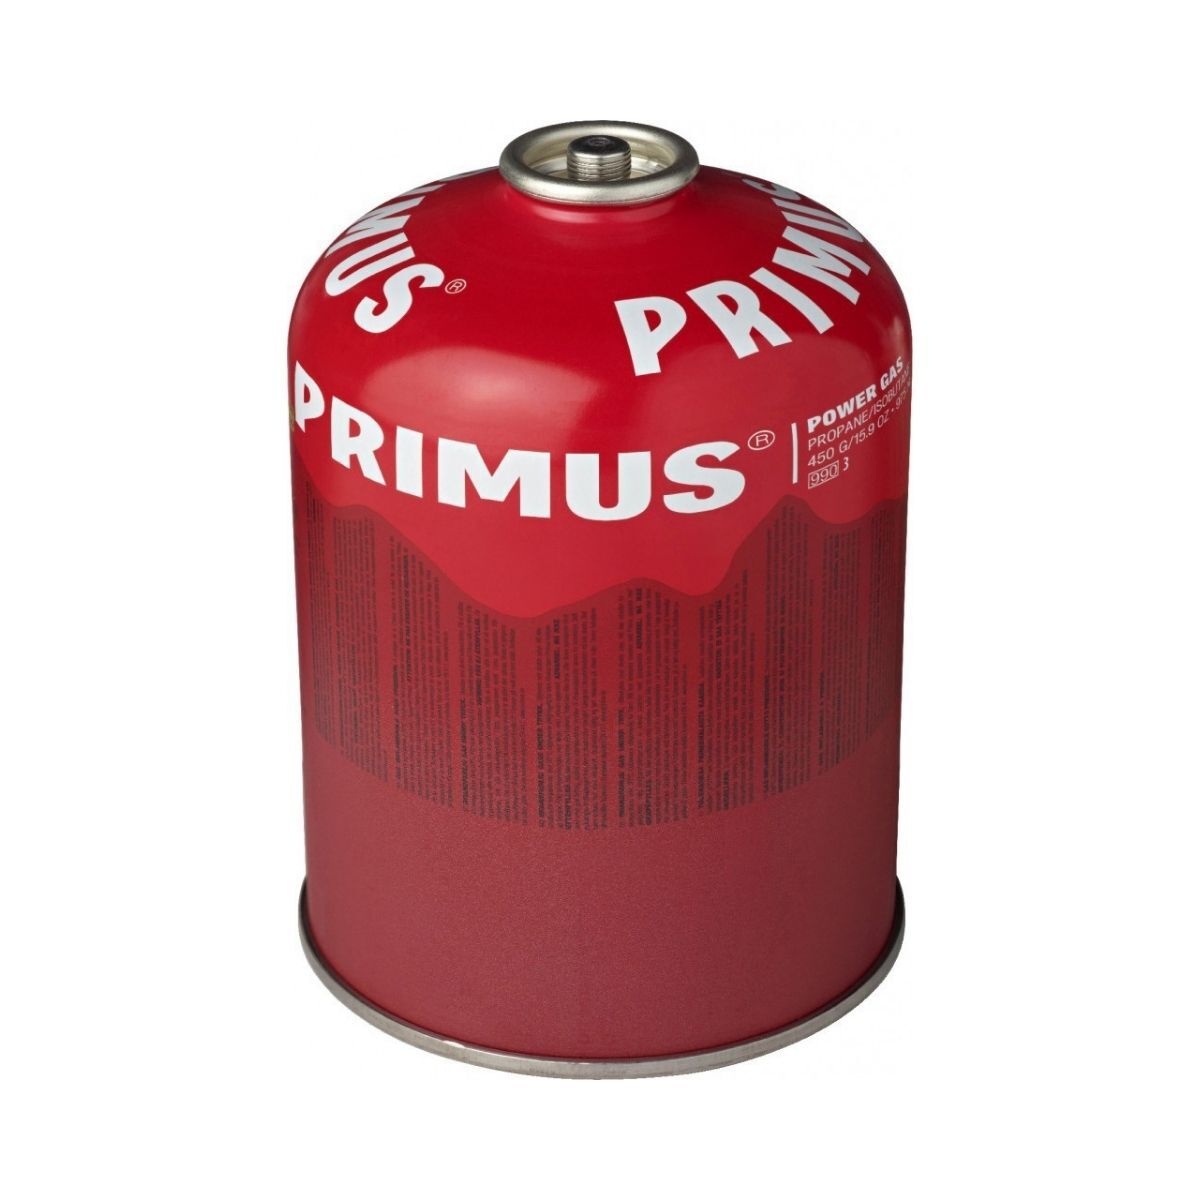 Primus Power Gas 450 g L2 - Gaspatroon